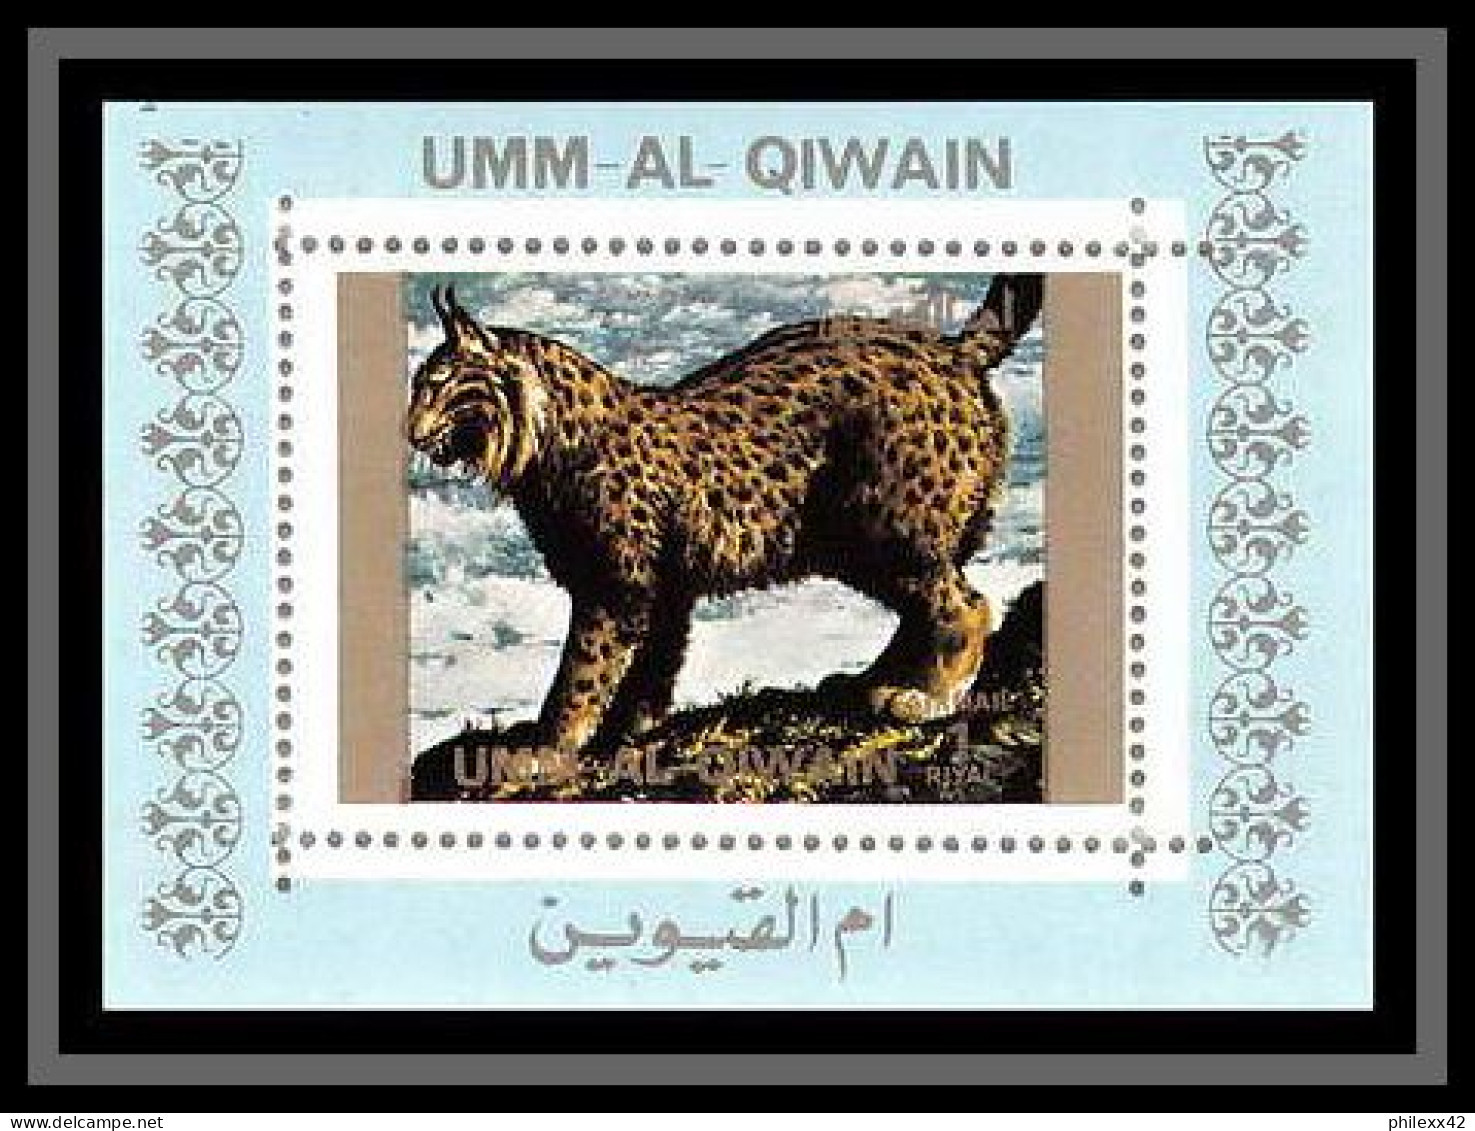 0049/ Umm al Qiwain deluxe blocs ** MNH michel N° 1370 / 1385 animaux - animals tirage bleu